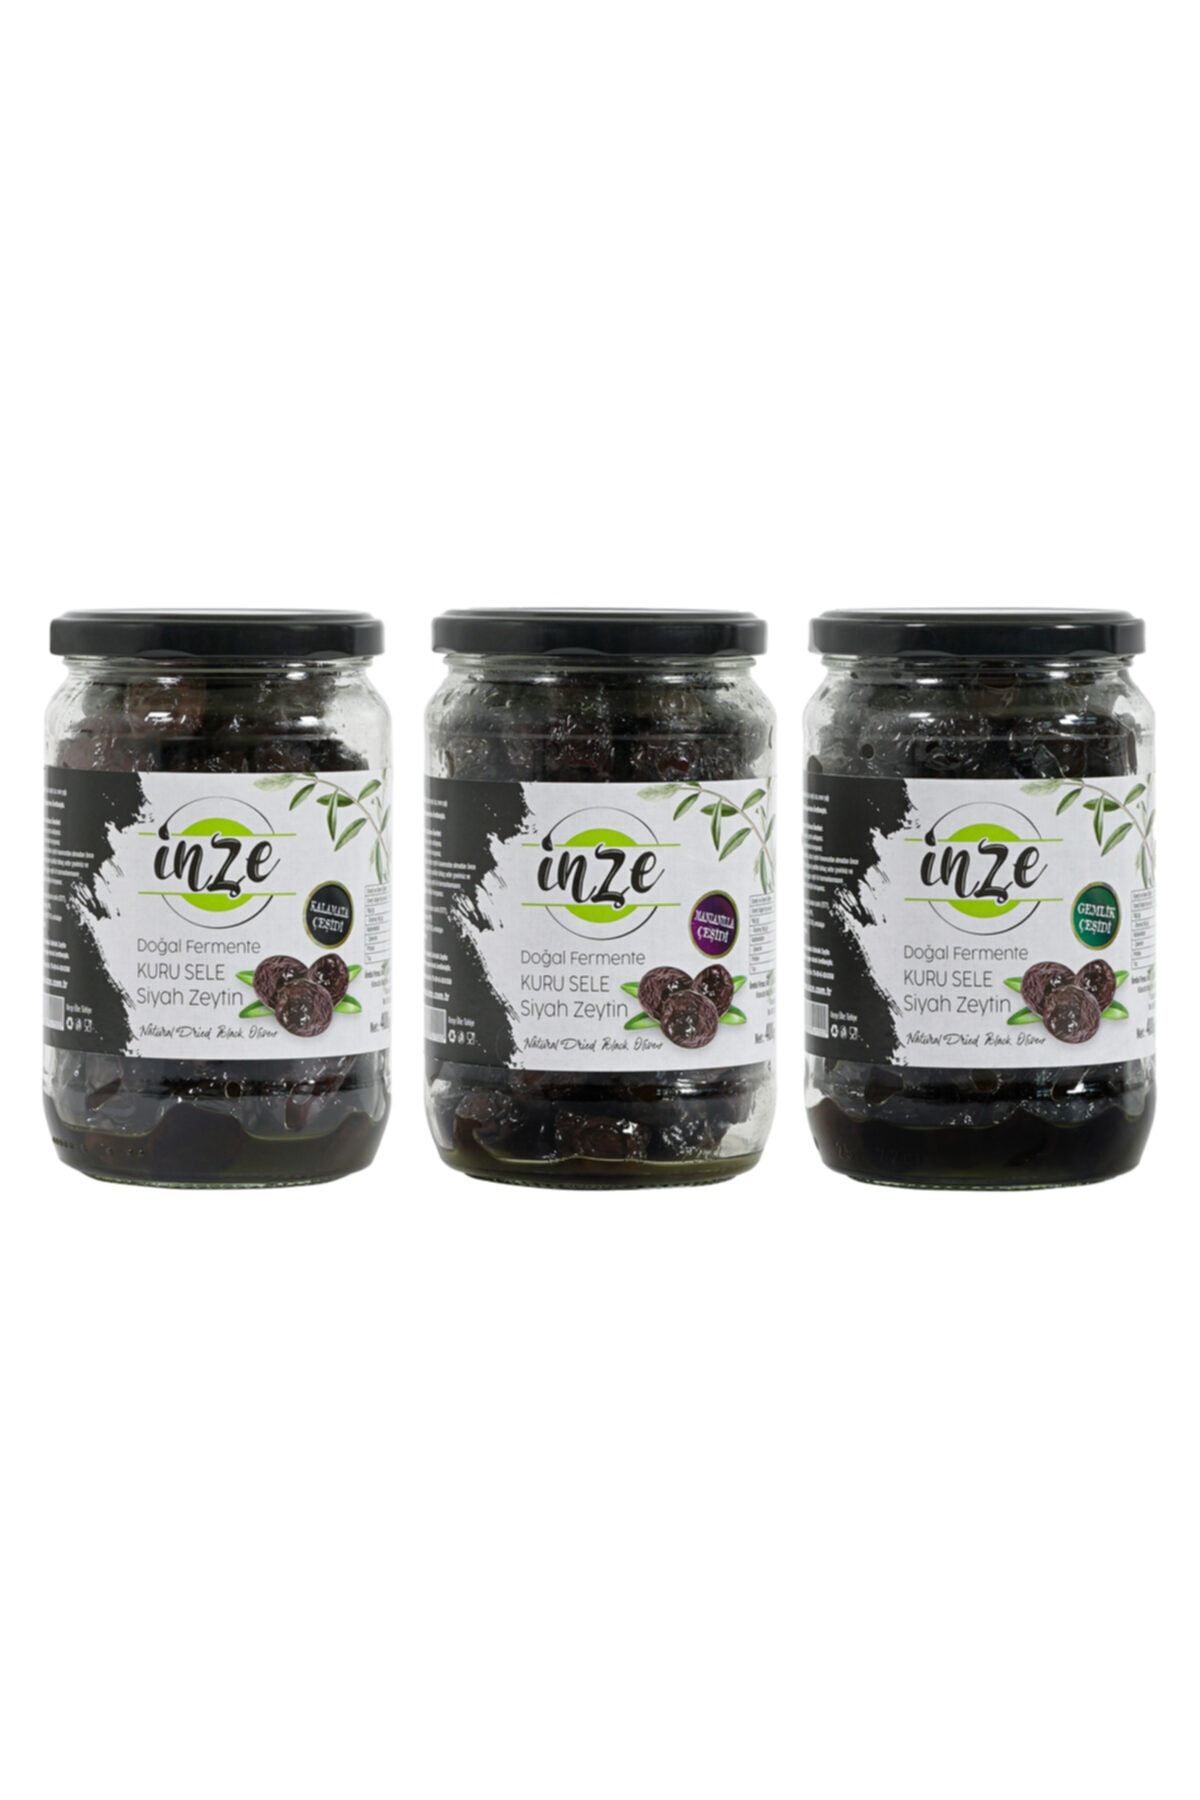 İnze Doğal Fermente Kuru Sele Siyah Zeytin Paketi 1.2 Kg